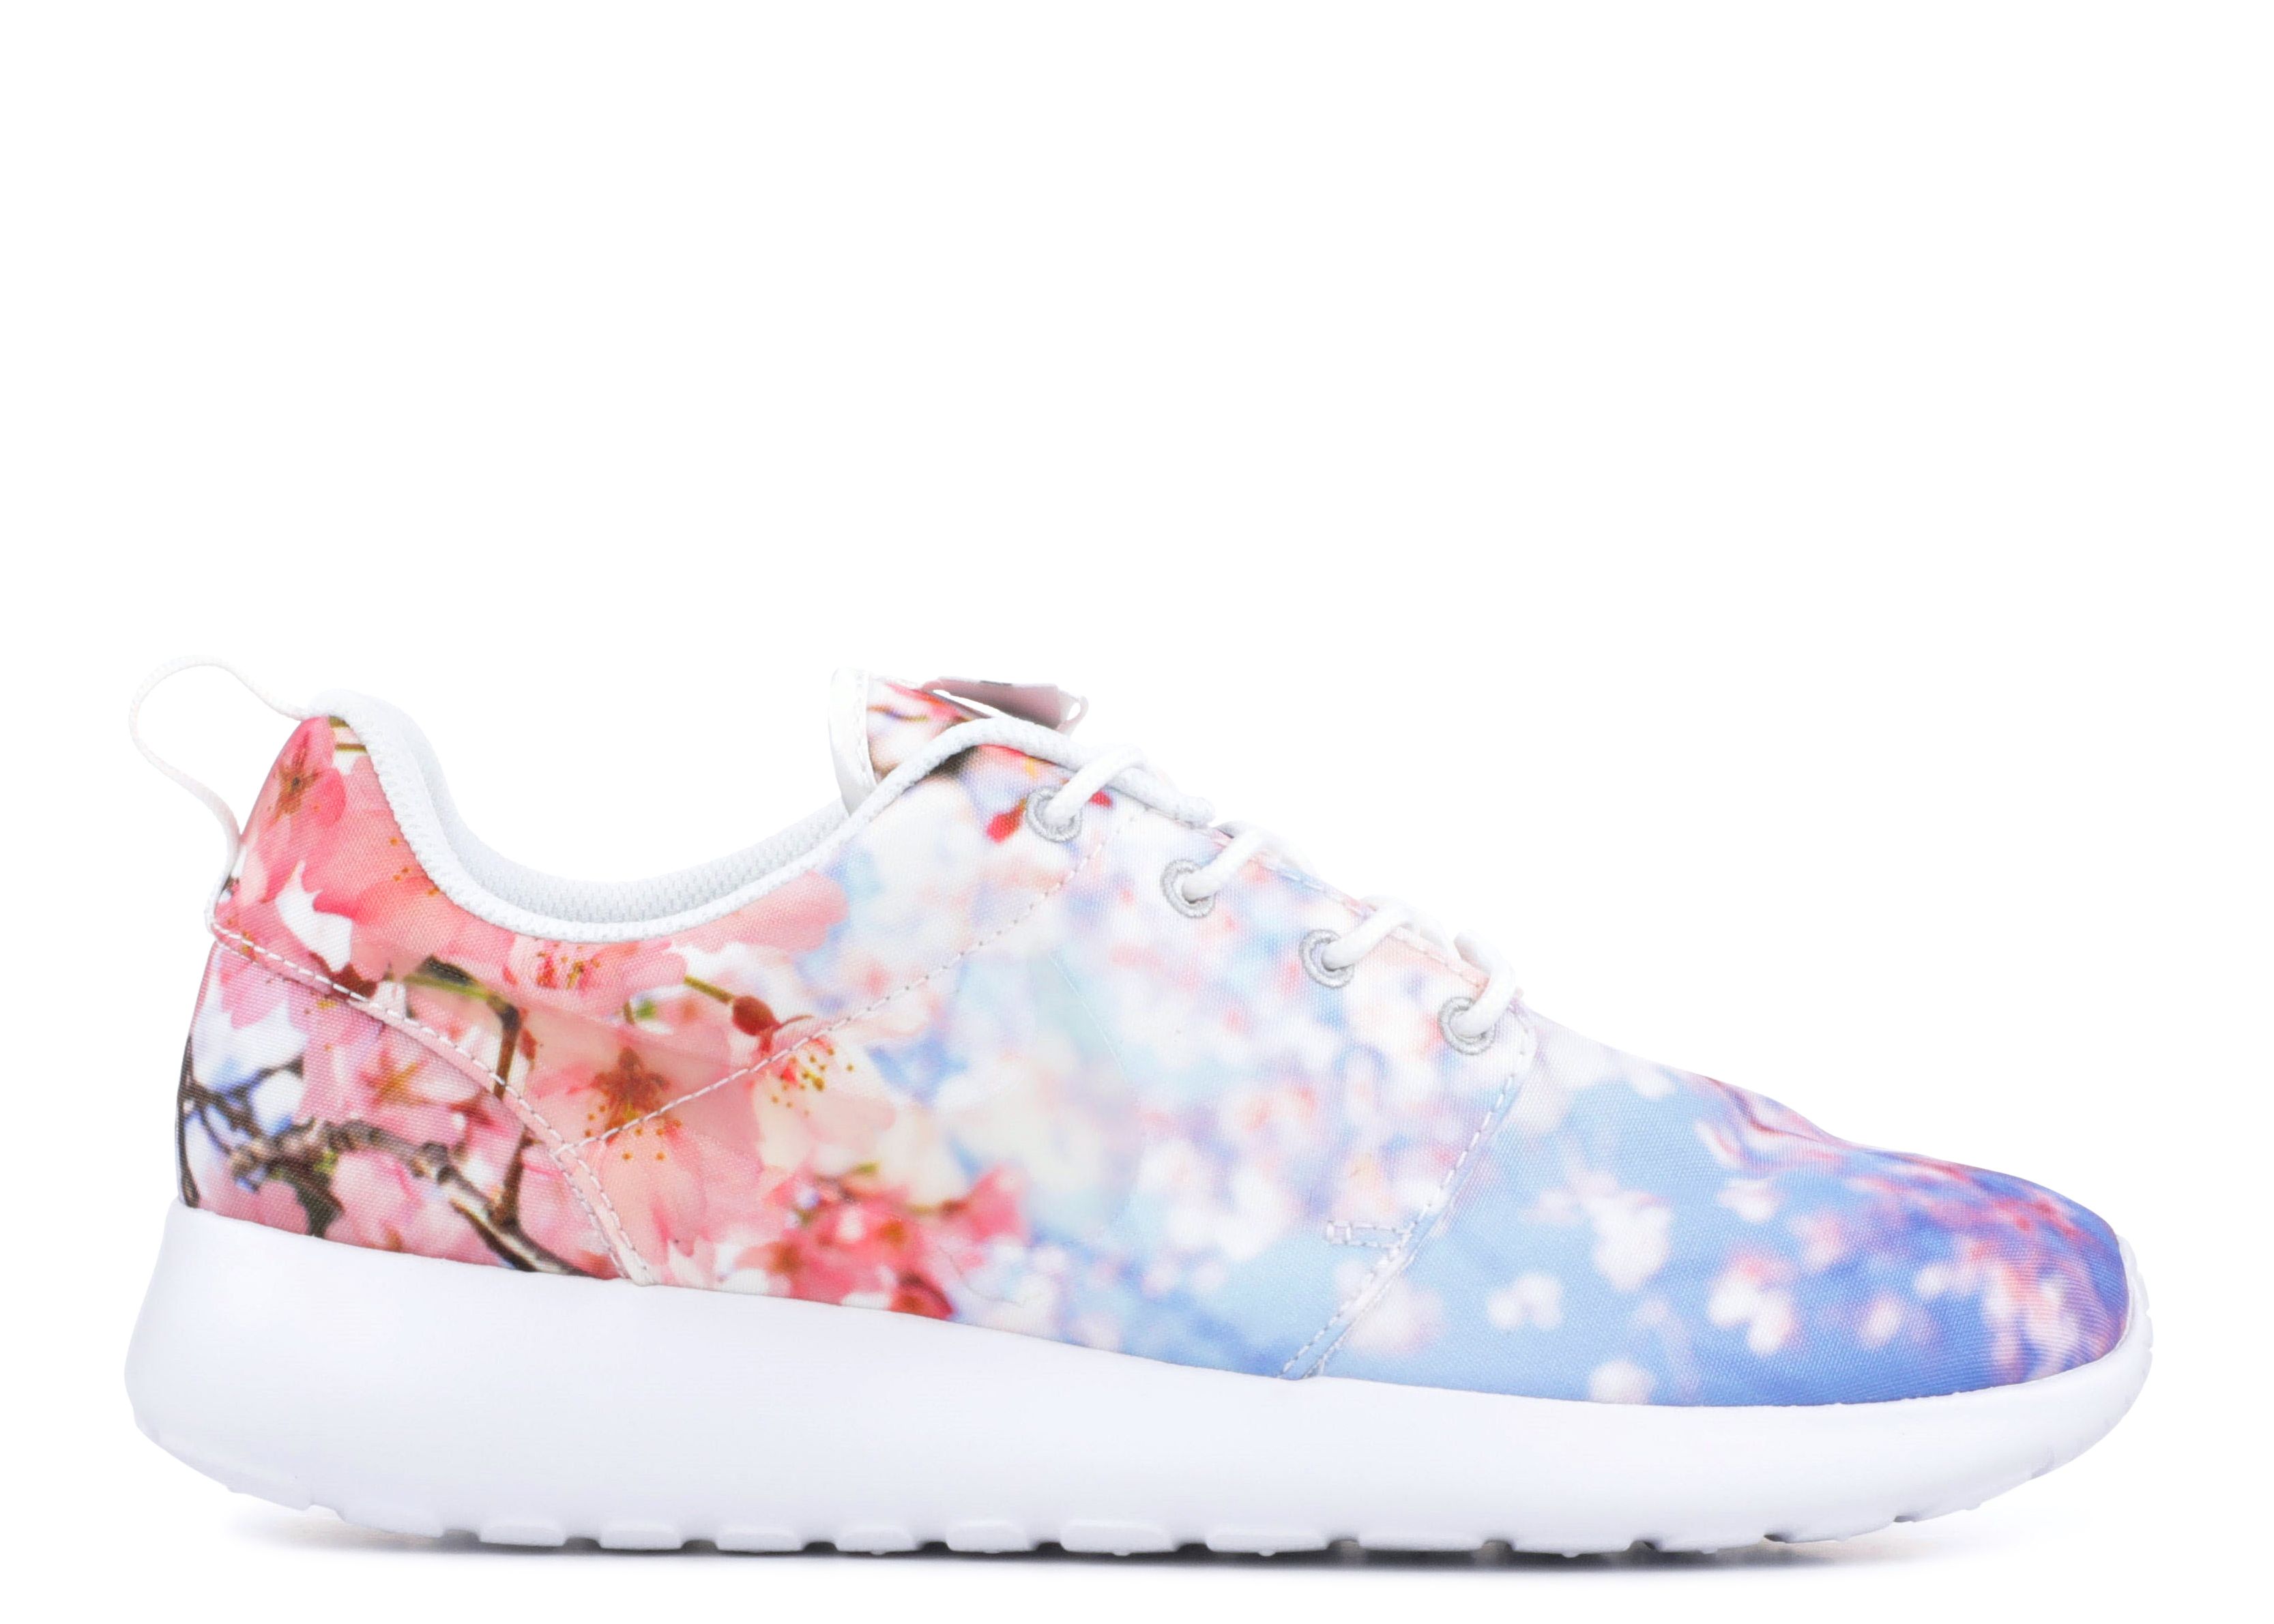 Wmns Roshe One 'Cherry Blossom' - Nike 